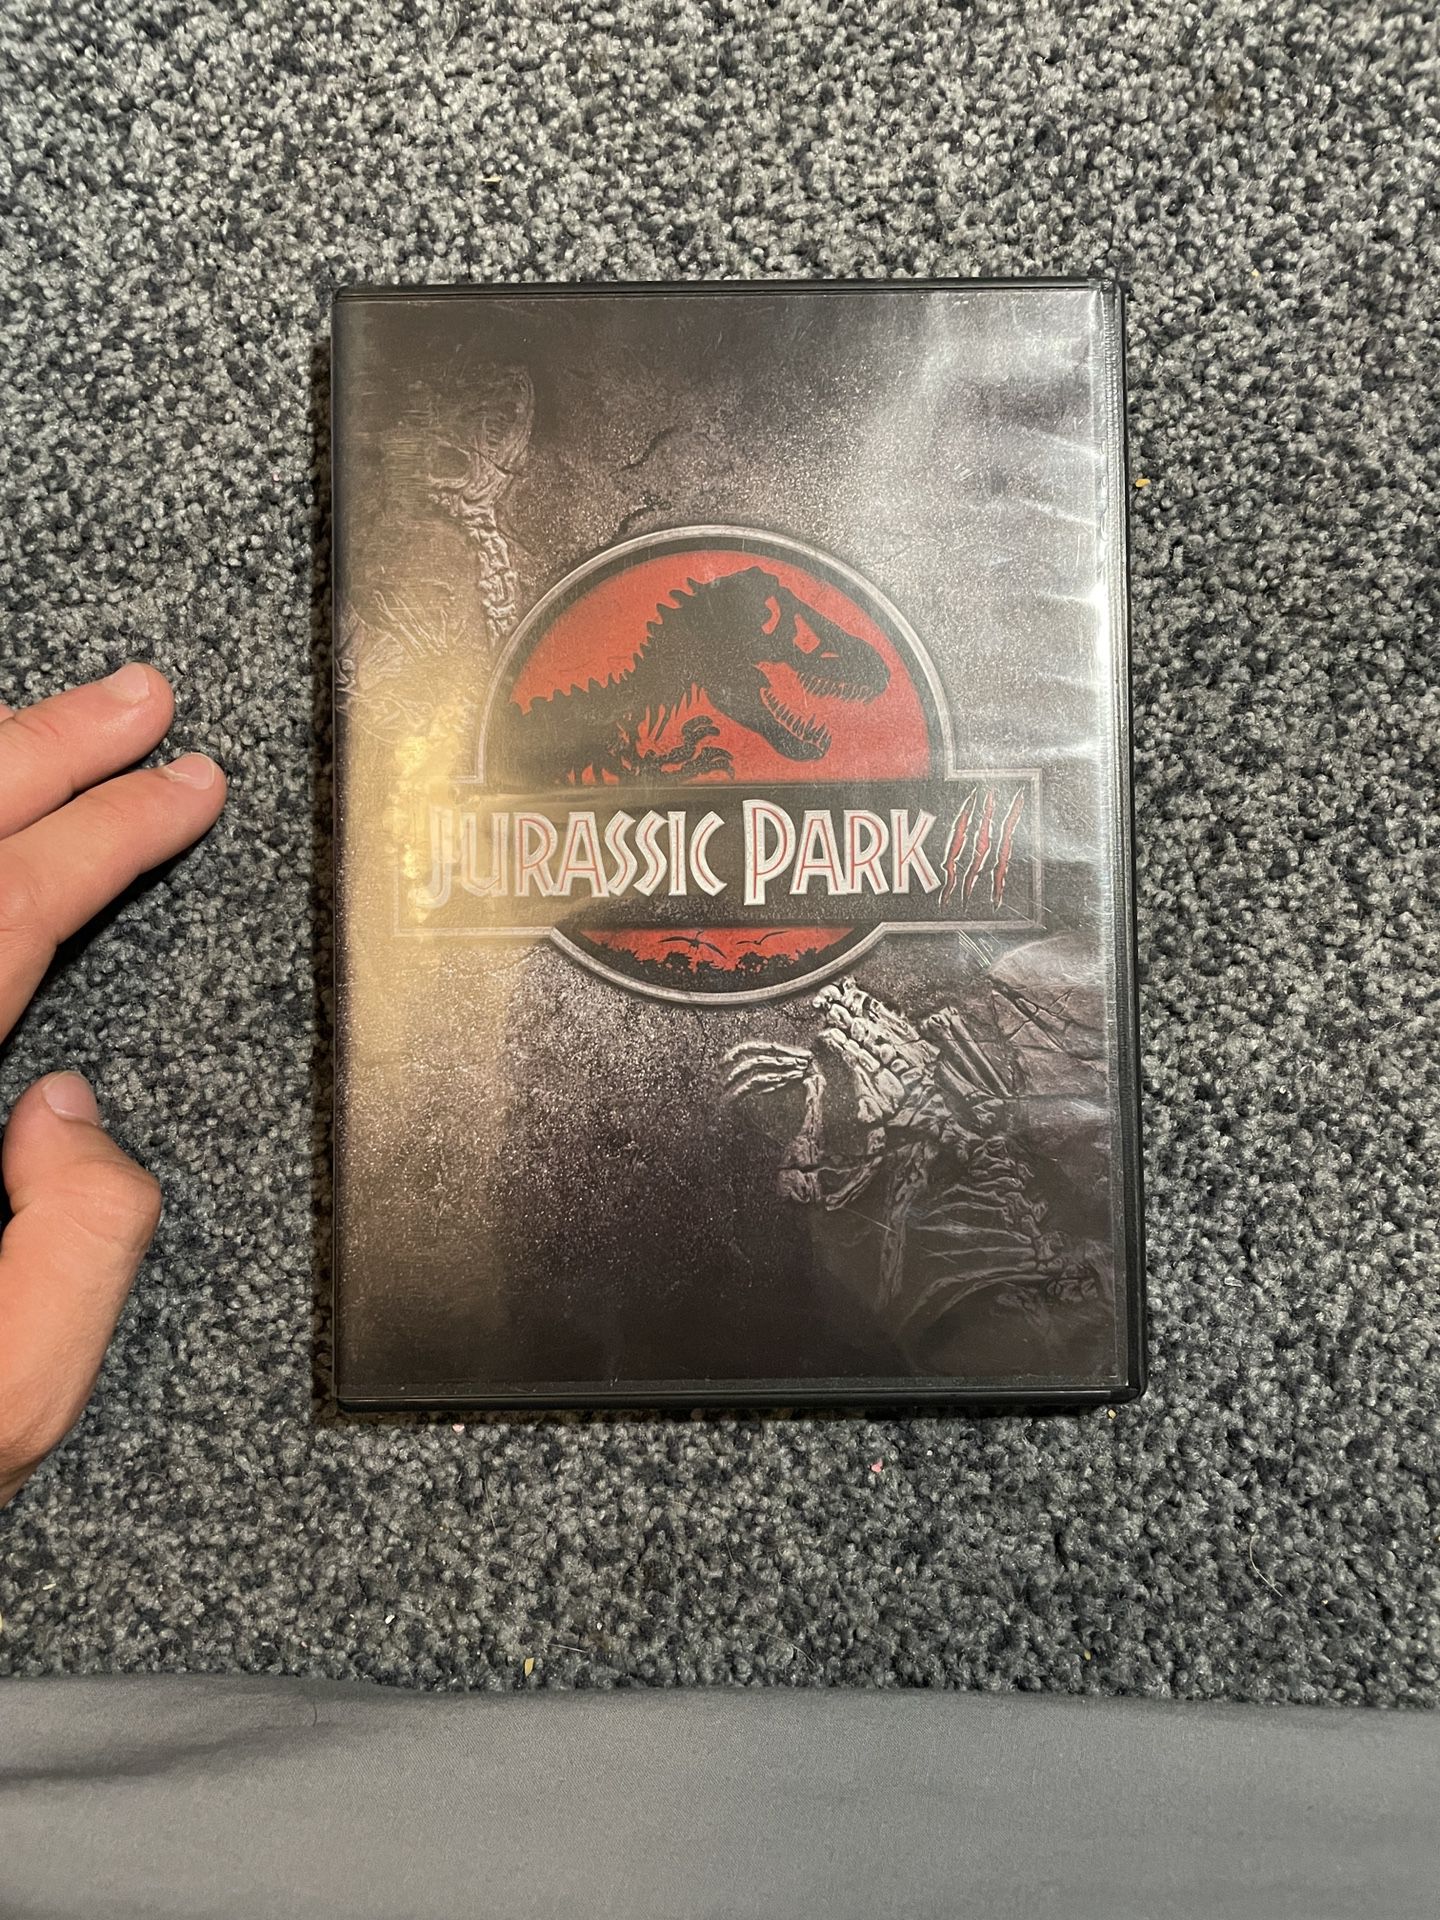 Jurassic Park 3 DVD